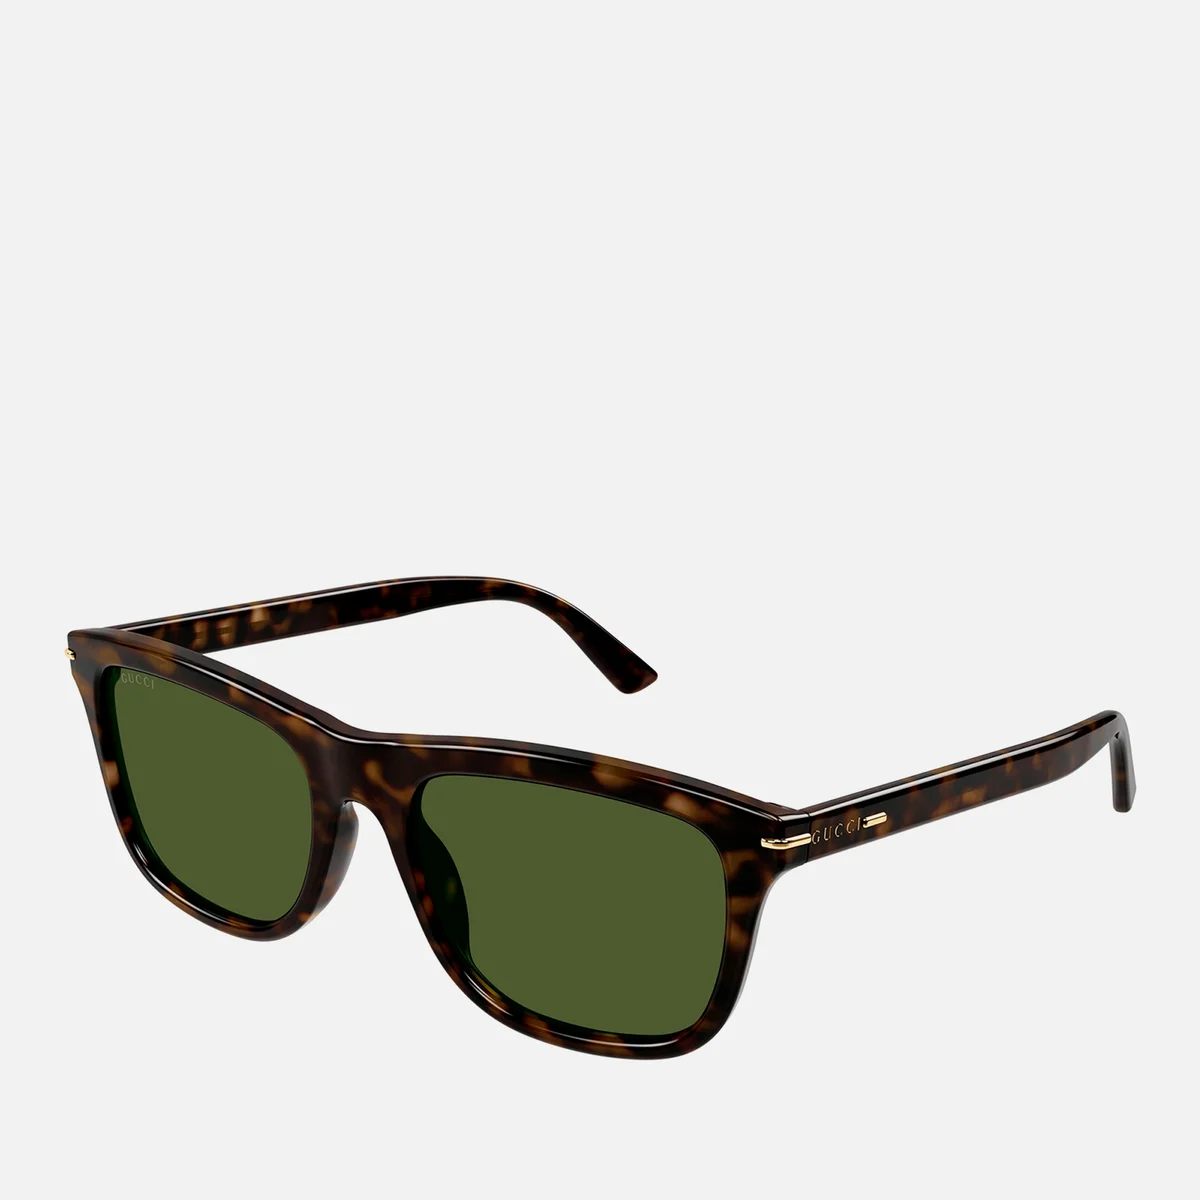 Gucci Tortoiseshell Recycled Acetate Square-Frame Sunglasses Image 1